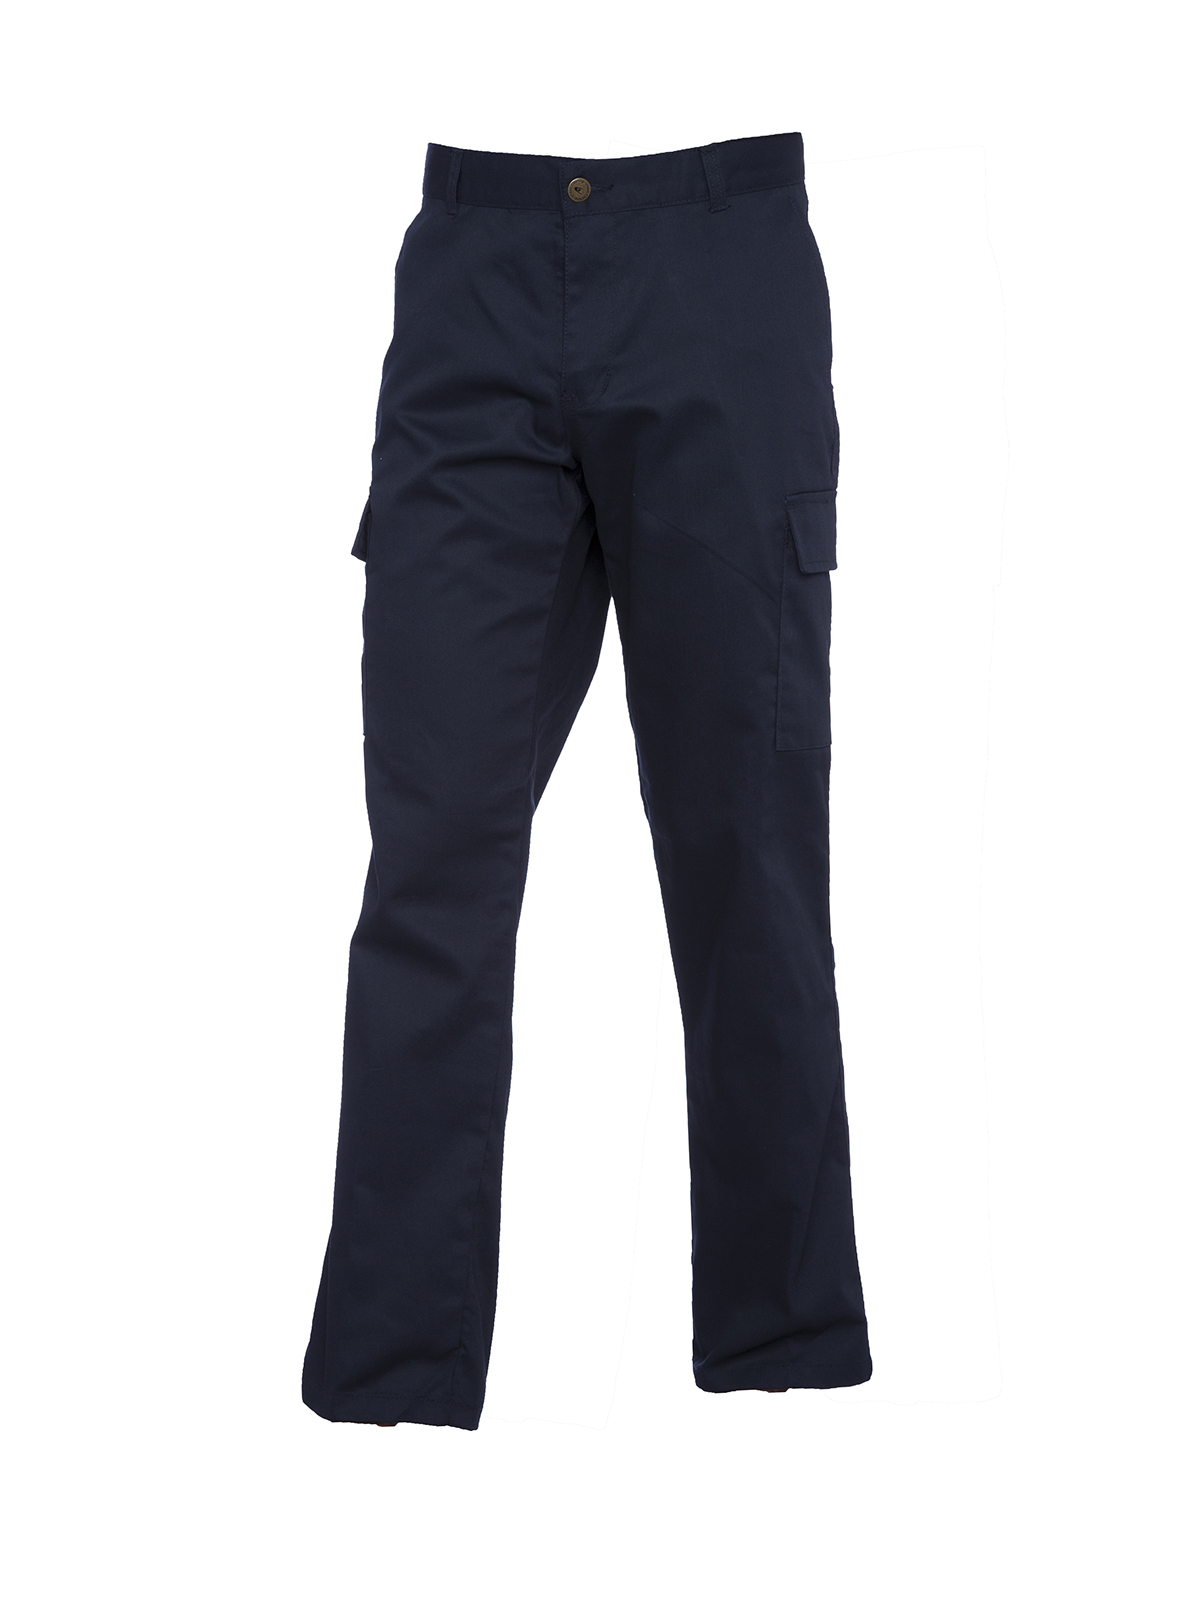 Ladies Cargo Trousers, Navy - Size 10